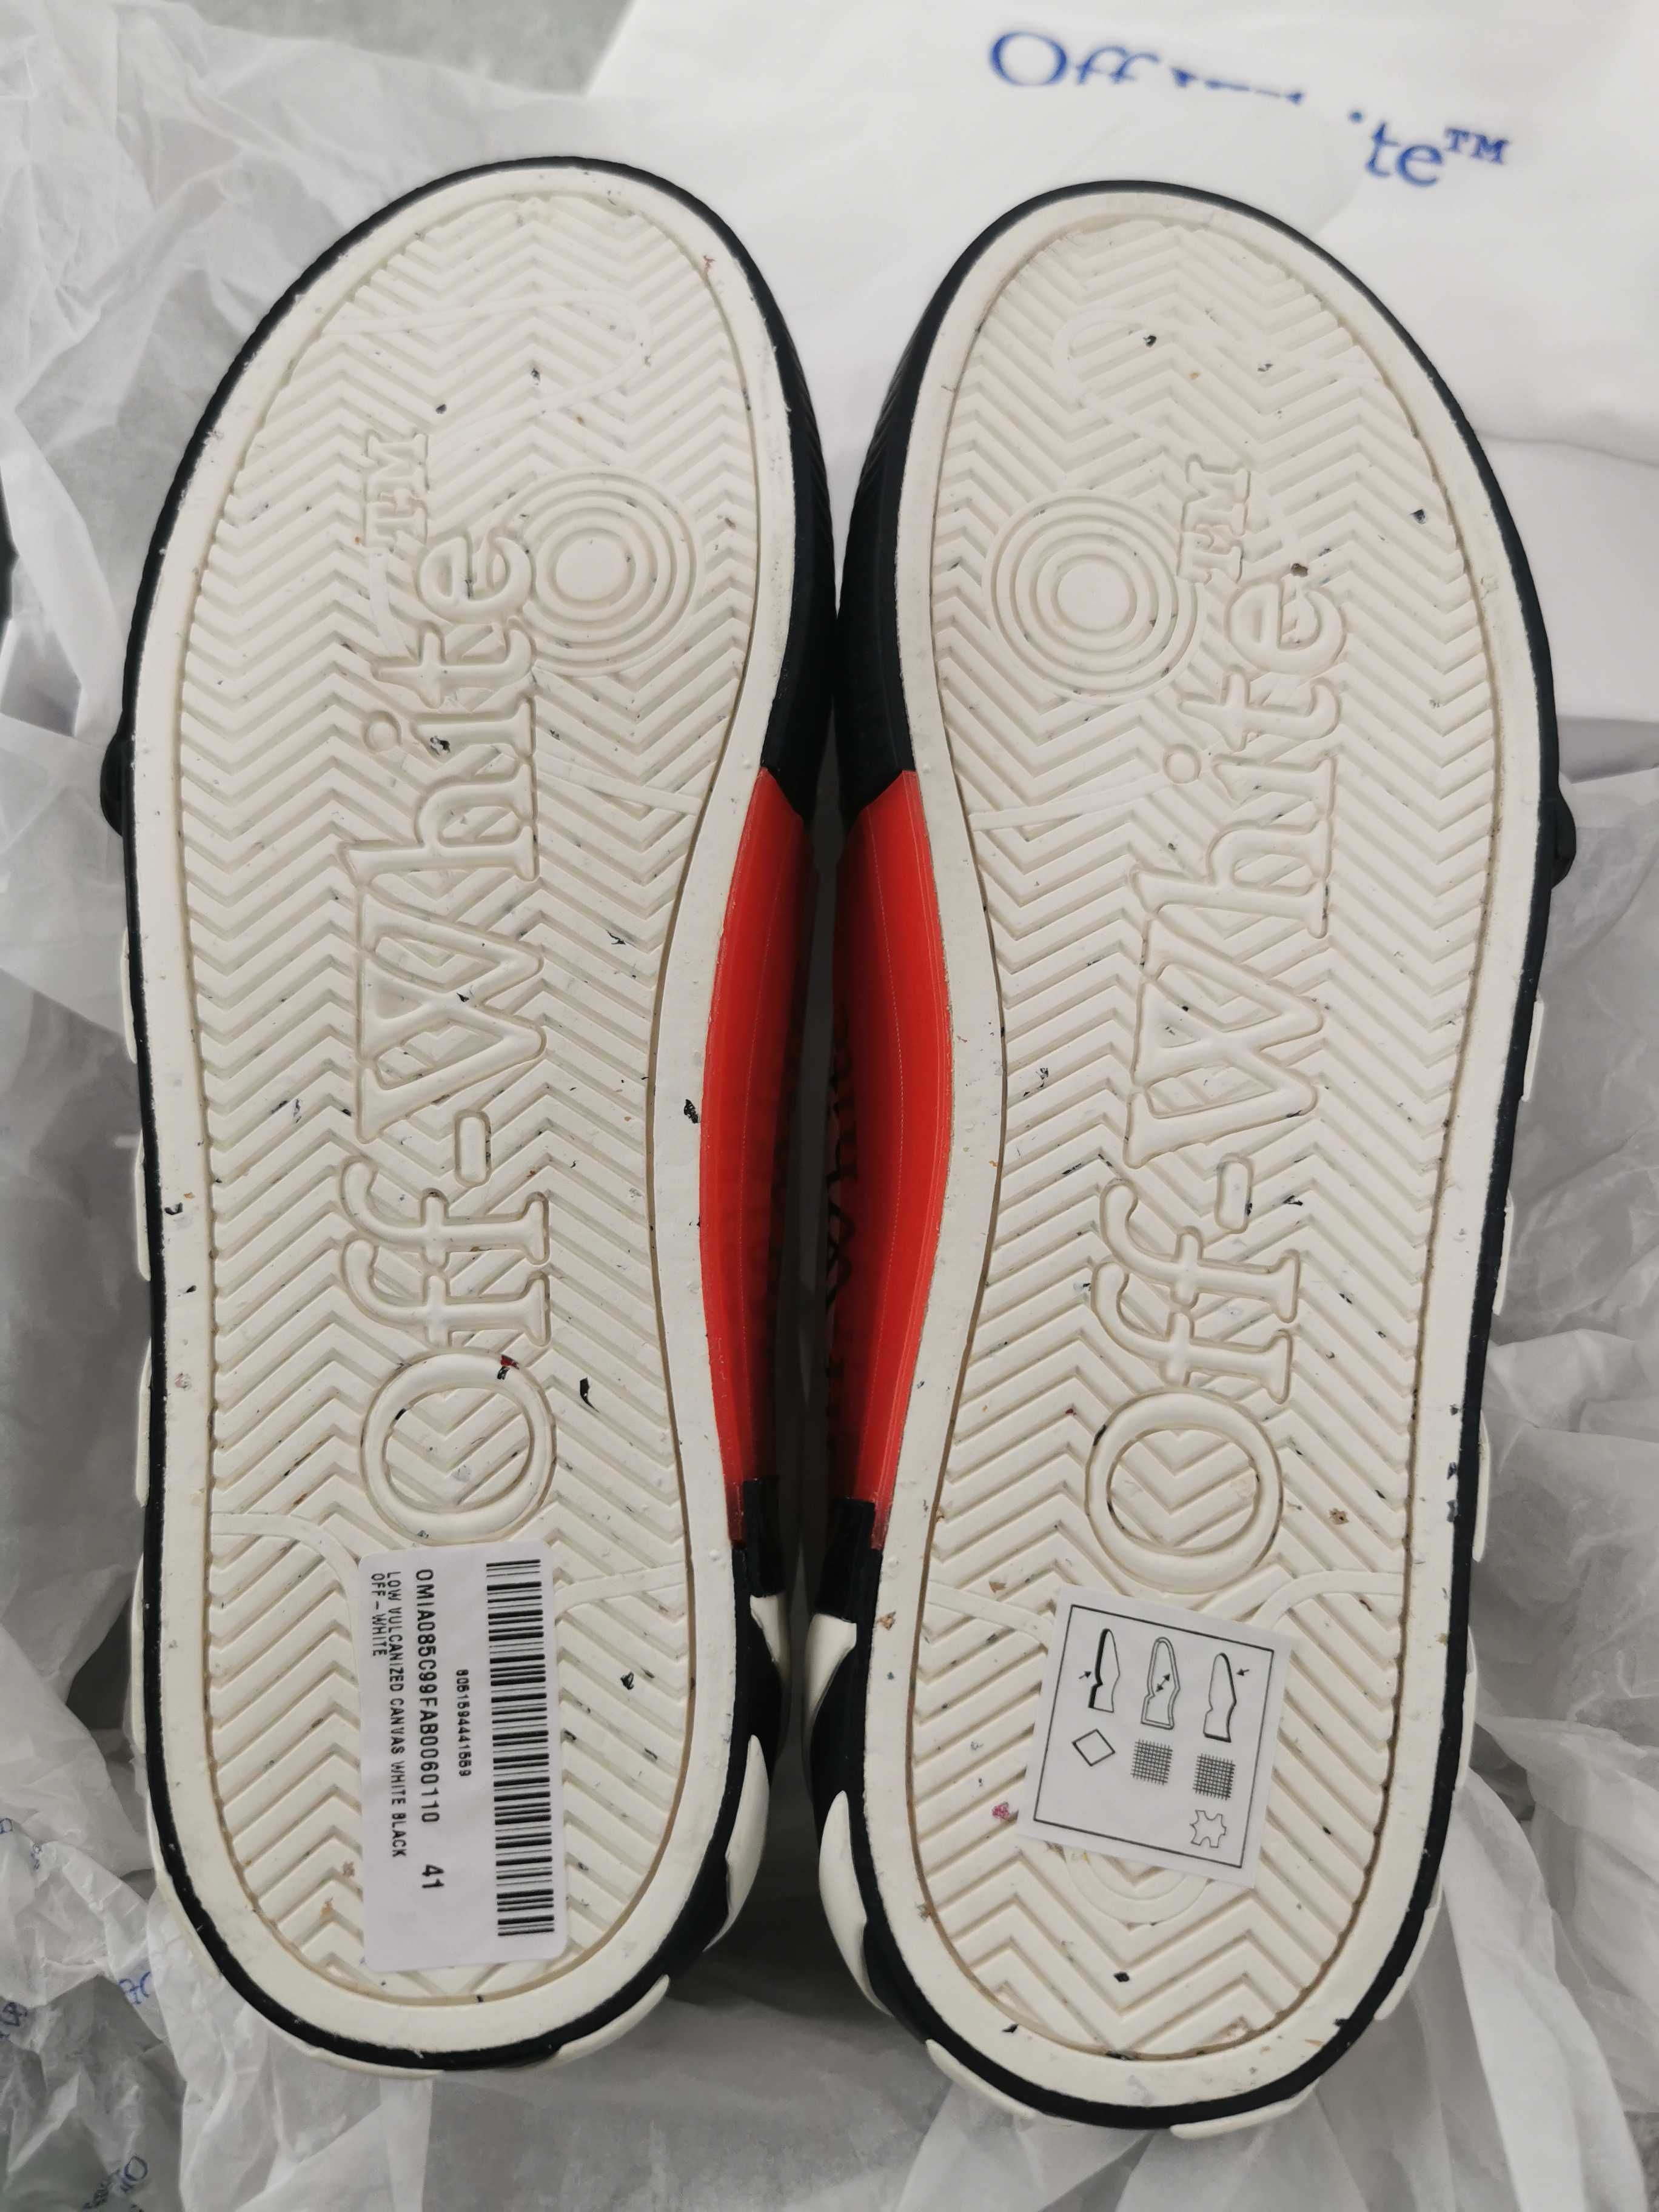 Off-White Low Vulcanized Canvas Sneakers White Black Ice 41 e 42